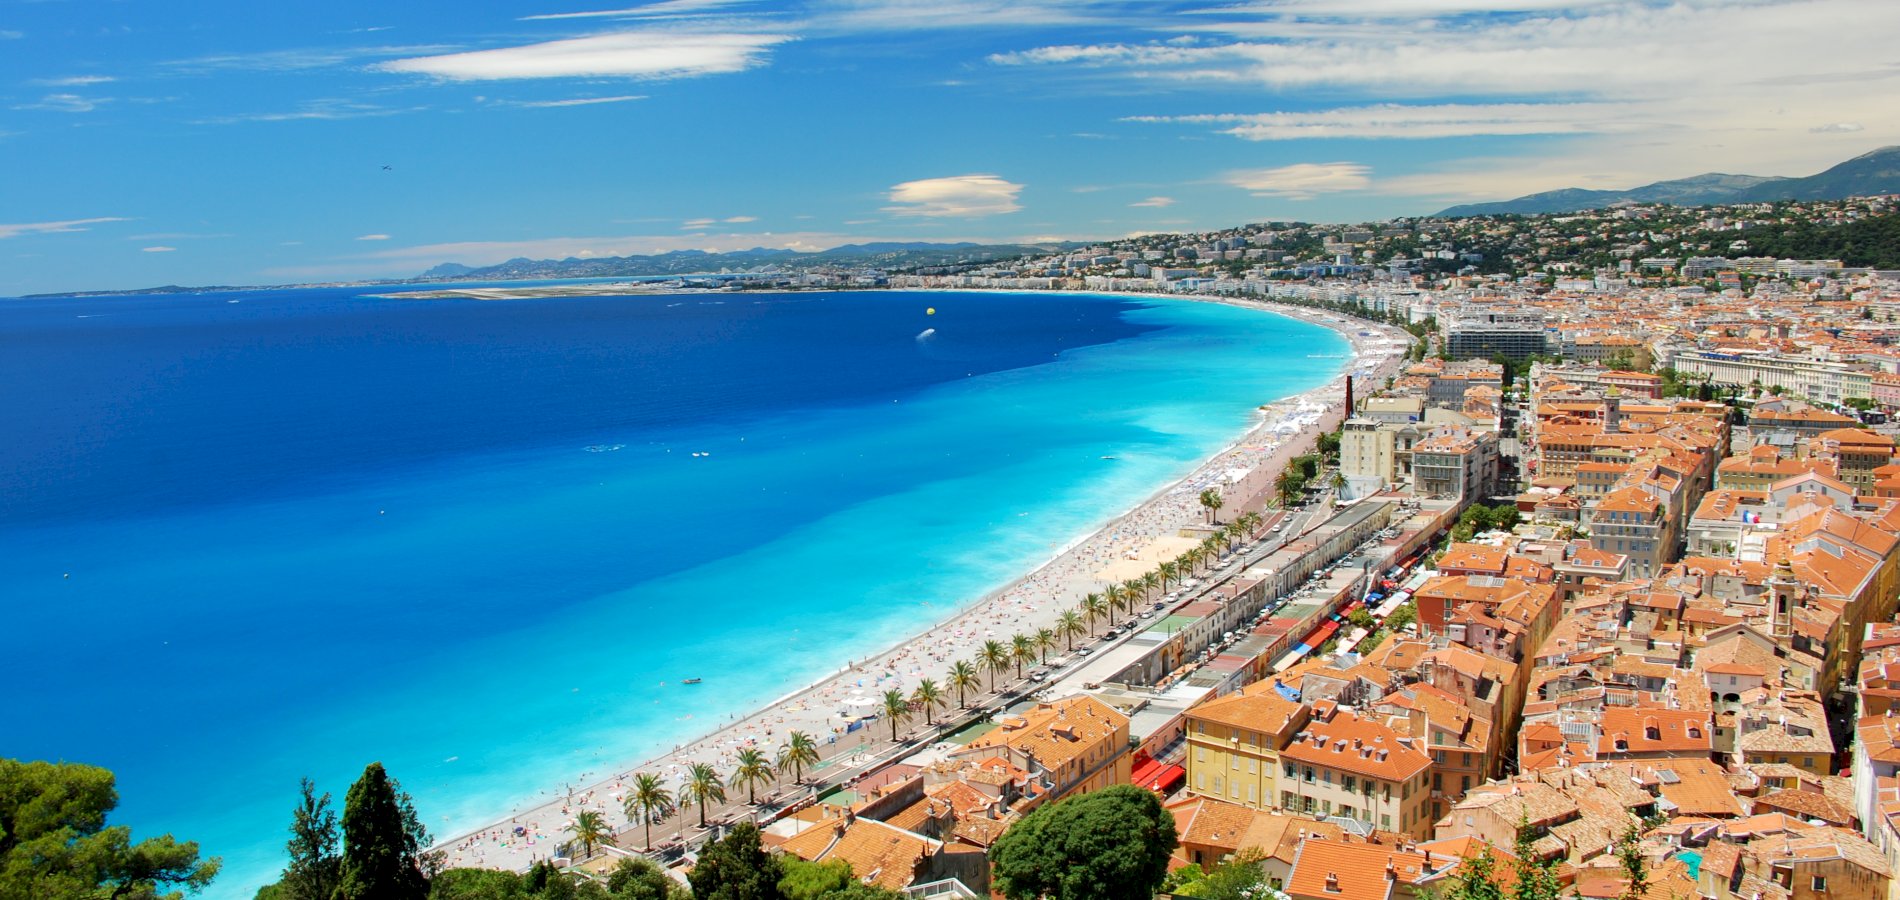 Dior Des Lices, Saint-Tropez coastal town on the French Riviera